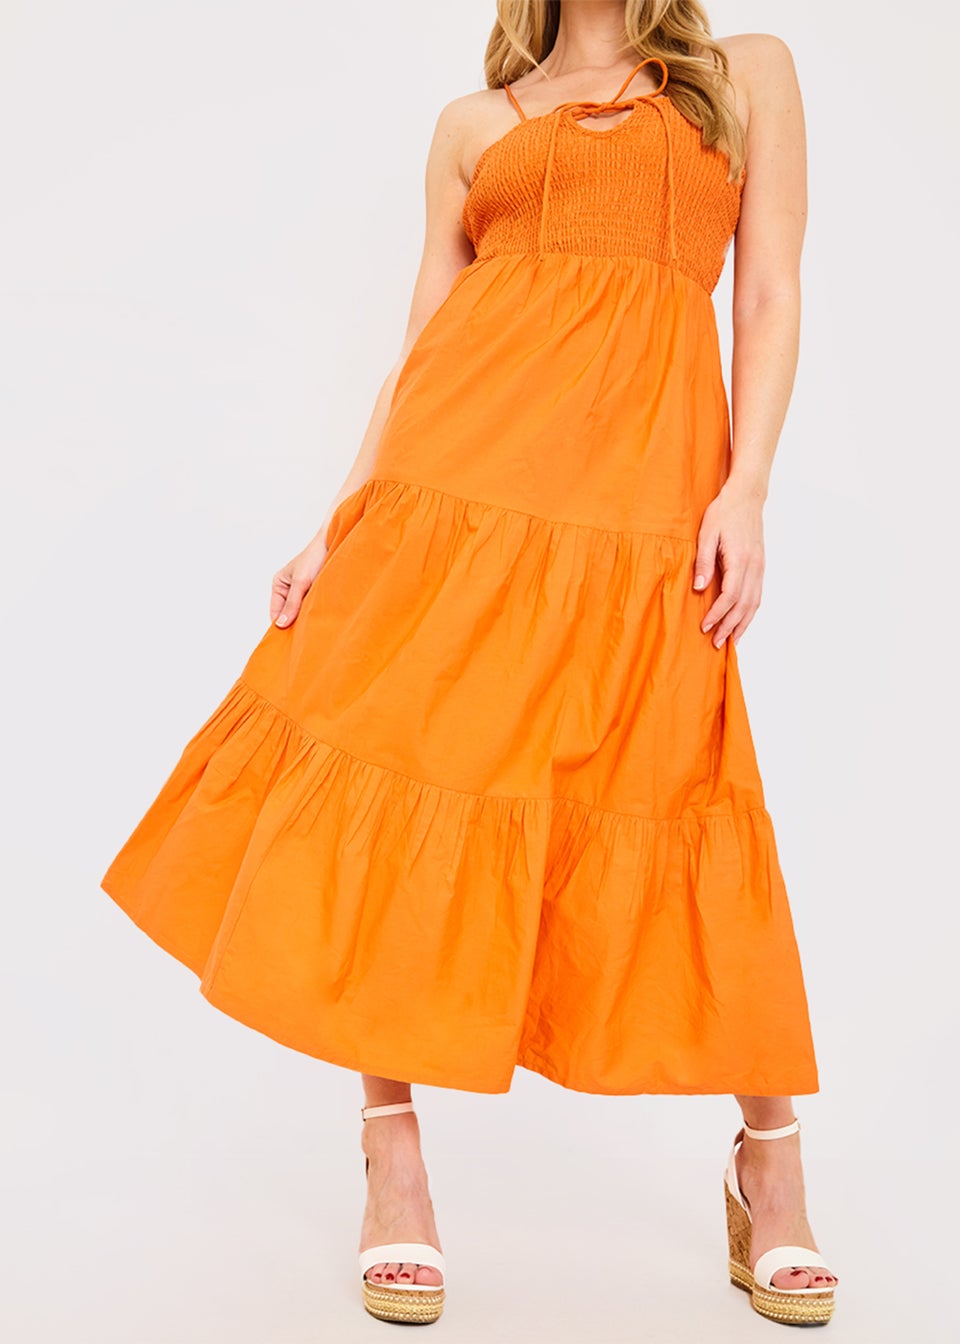 In The Style Jac Jossa Orange Halter Neck Midaxi Dress - Matalan